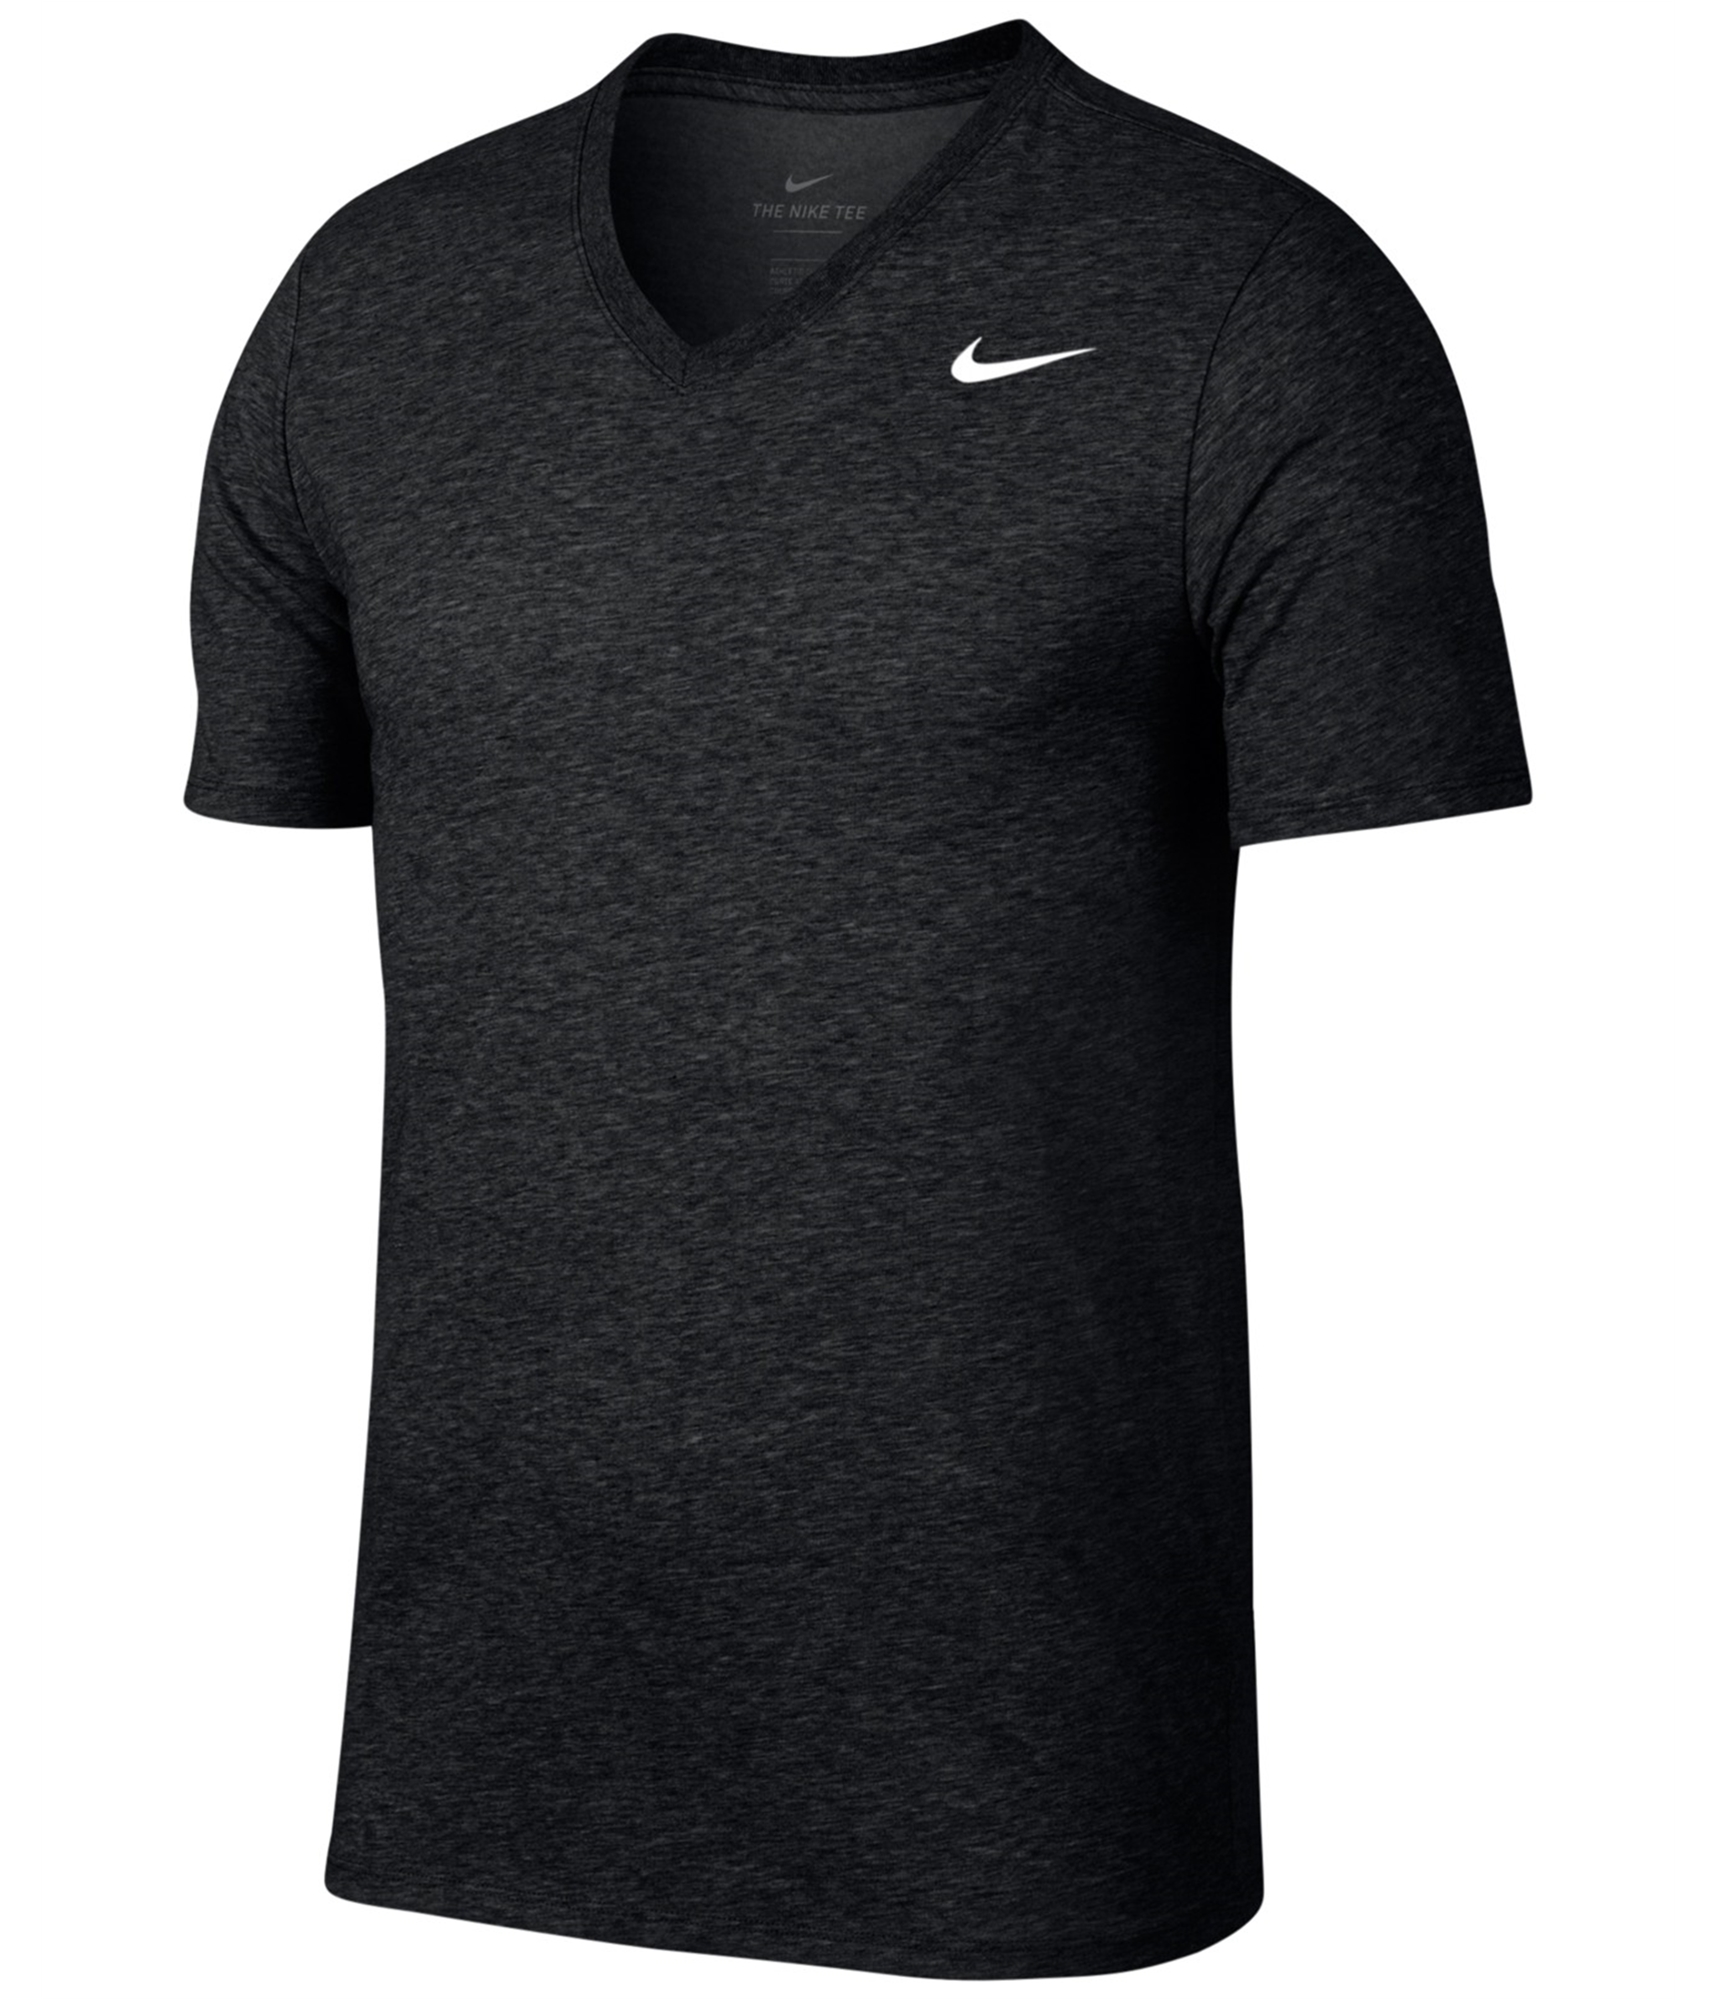 Nike Mens Training Basic T-Shirt, Grey, Small | eBay